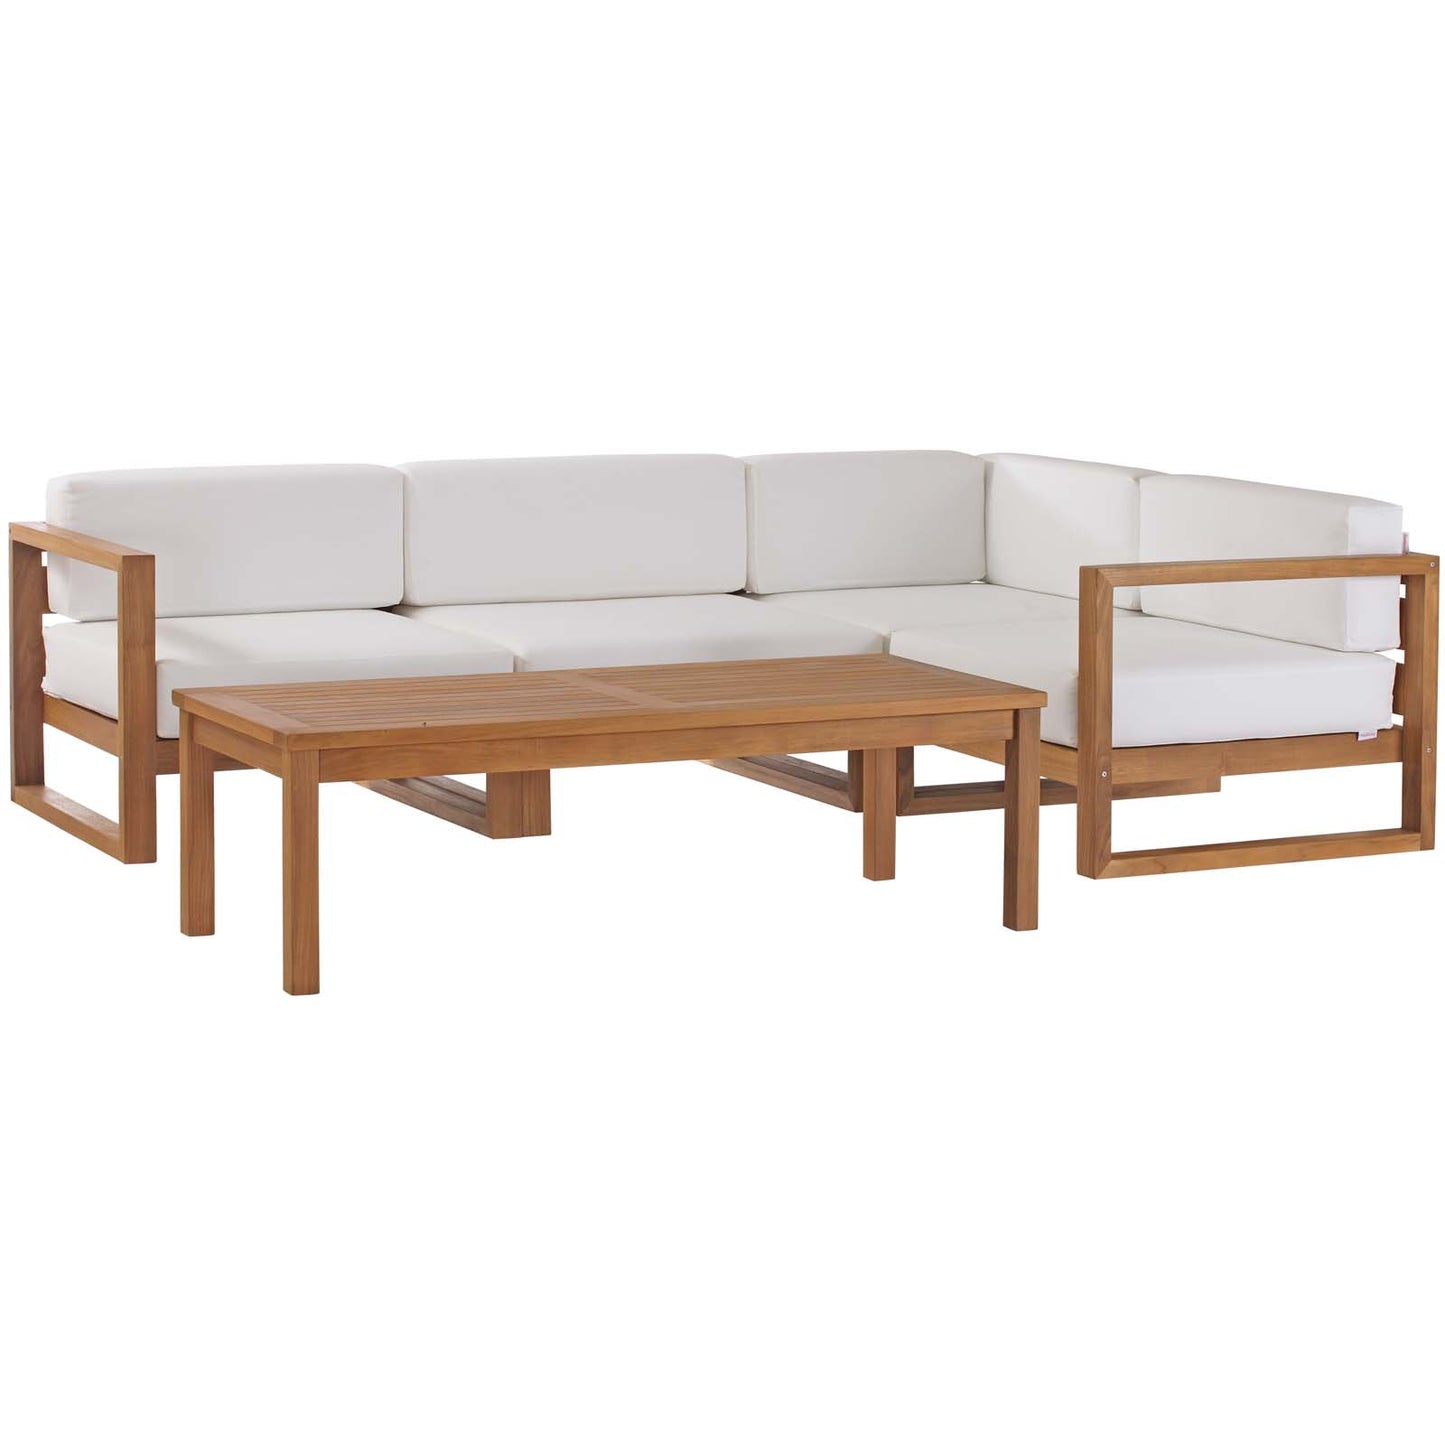 Upland Outdoor Patio Teak Wood 5-Piece Sectional Sofa Set Natural White EEI-4619-NAT-WHI-SET